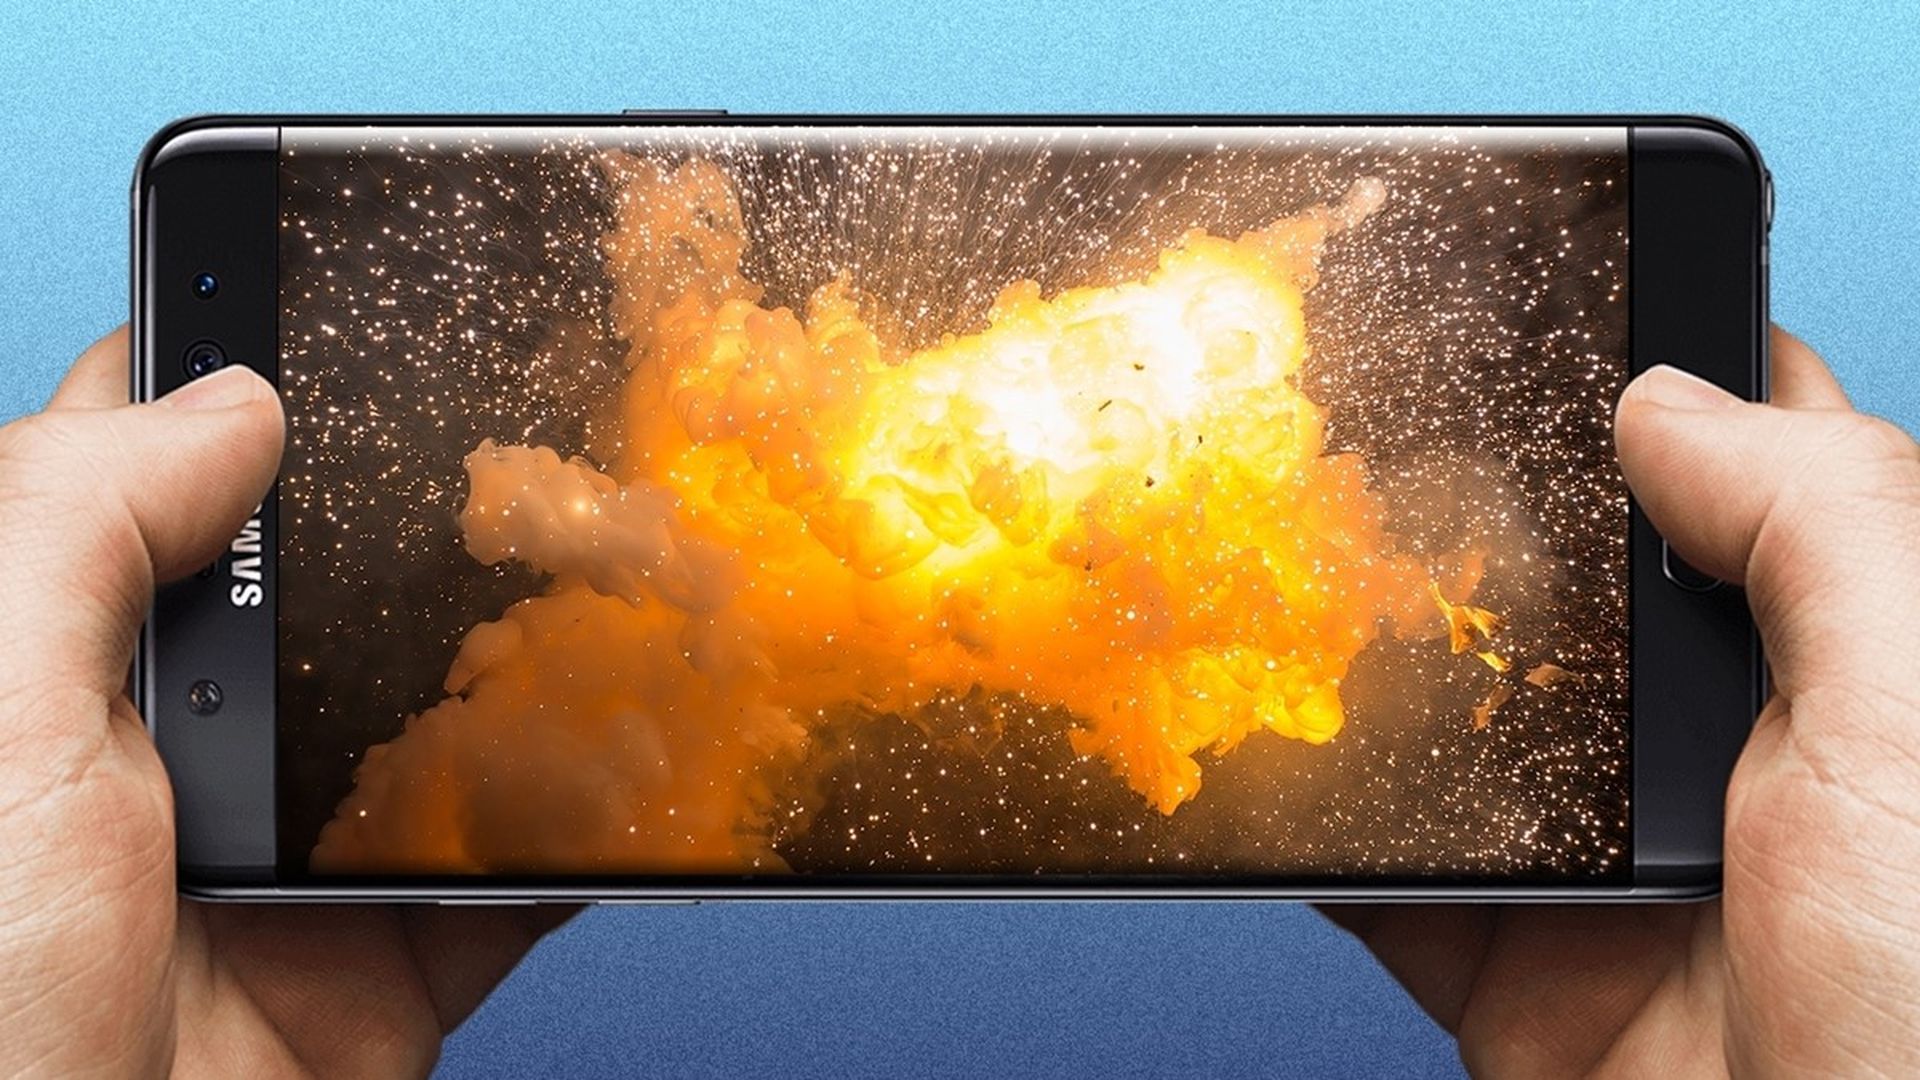 Samsung Galaxy Note 7 exploding. Samsung Note 7 взрывается. Samsung Galaxy Note 7 Fe. Самсунг взорвался. Айфон очень сильно нагревается